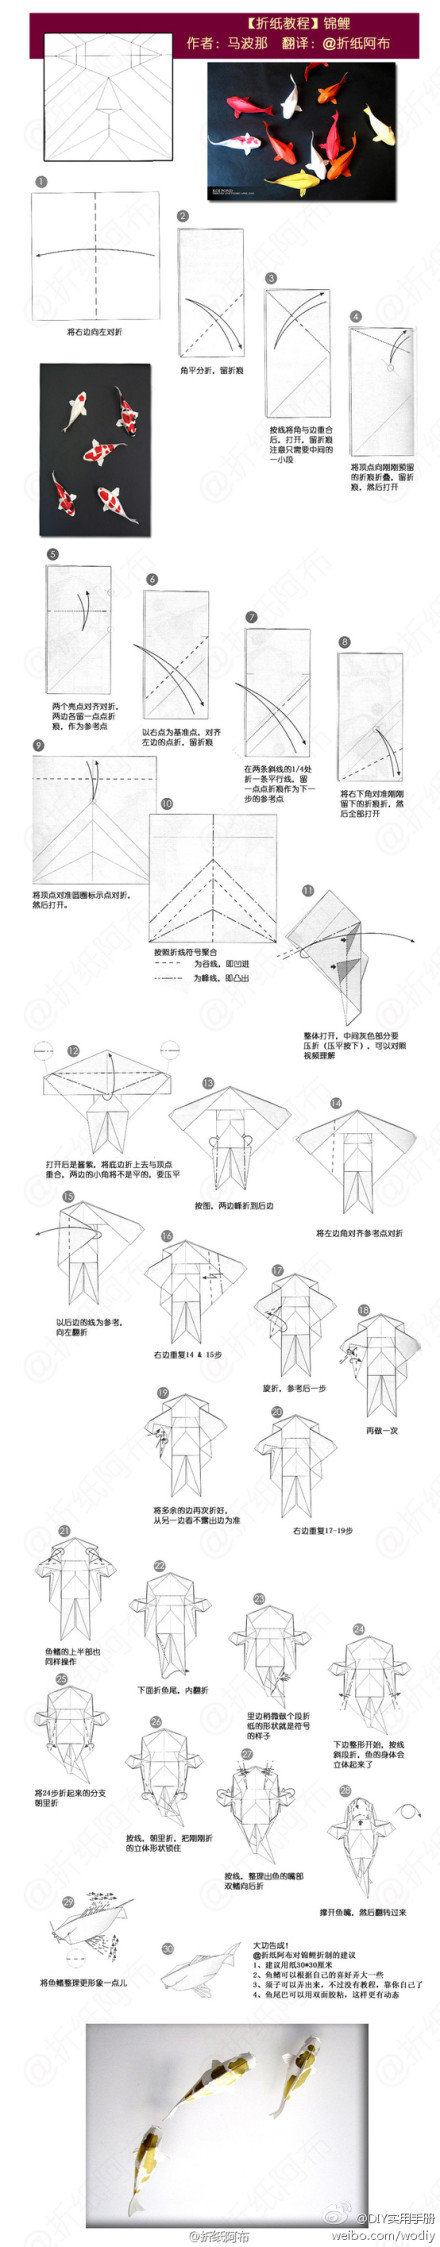 origami koi fish diagram